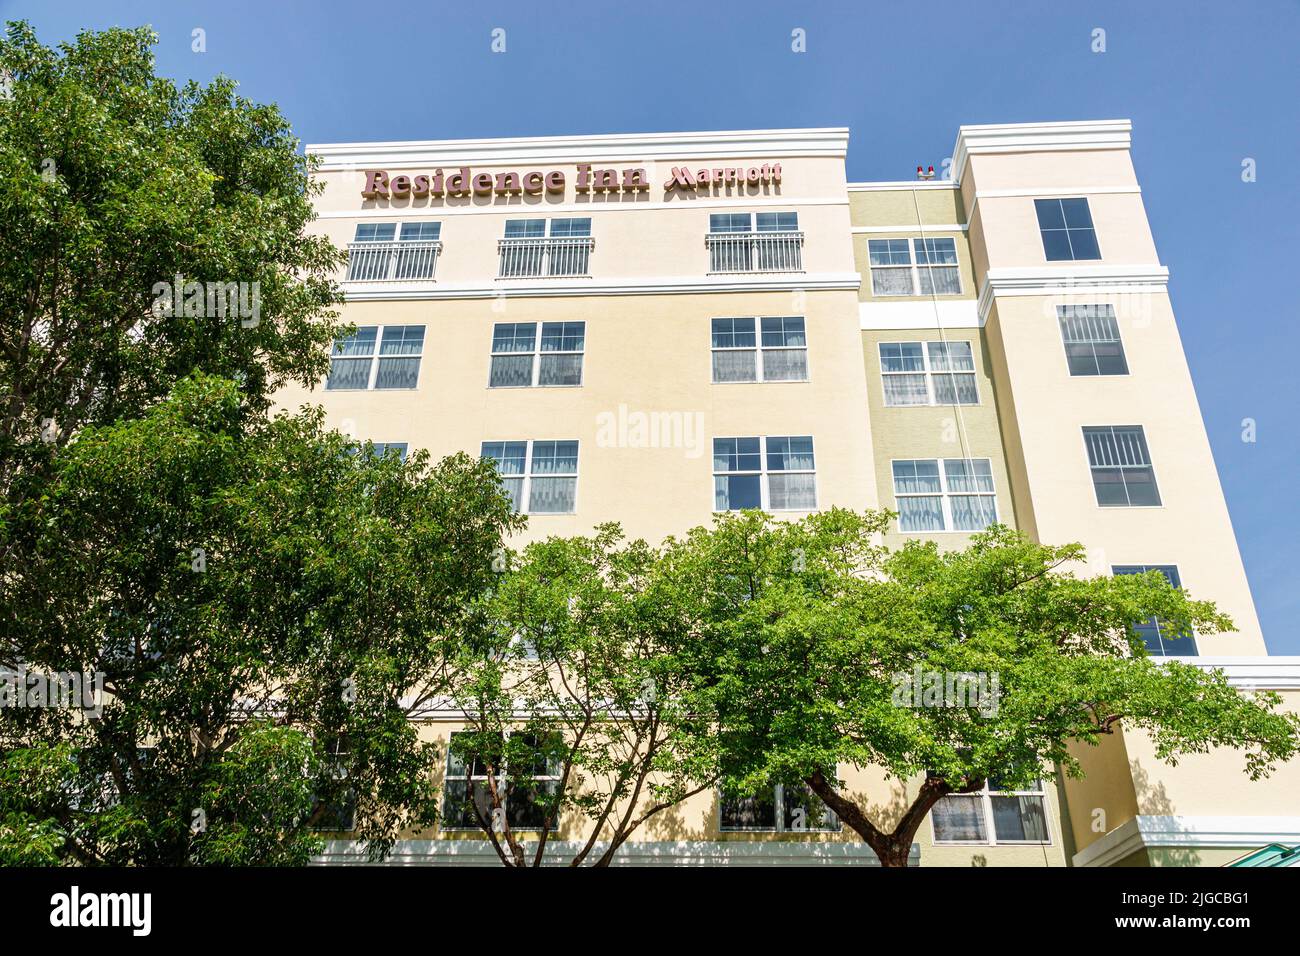 Fort Ft. Myers Florida,Residence Inn by Marriott Fort Myers Sanibel hotel lodging,outside exterior sign Stock Photo